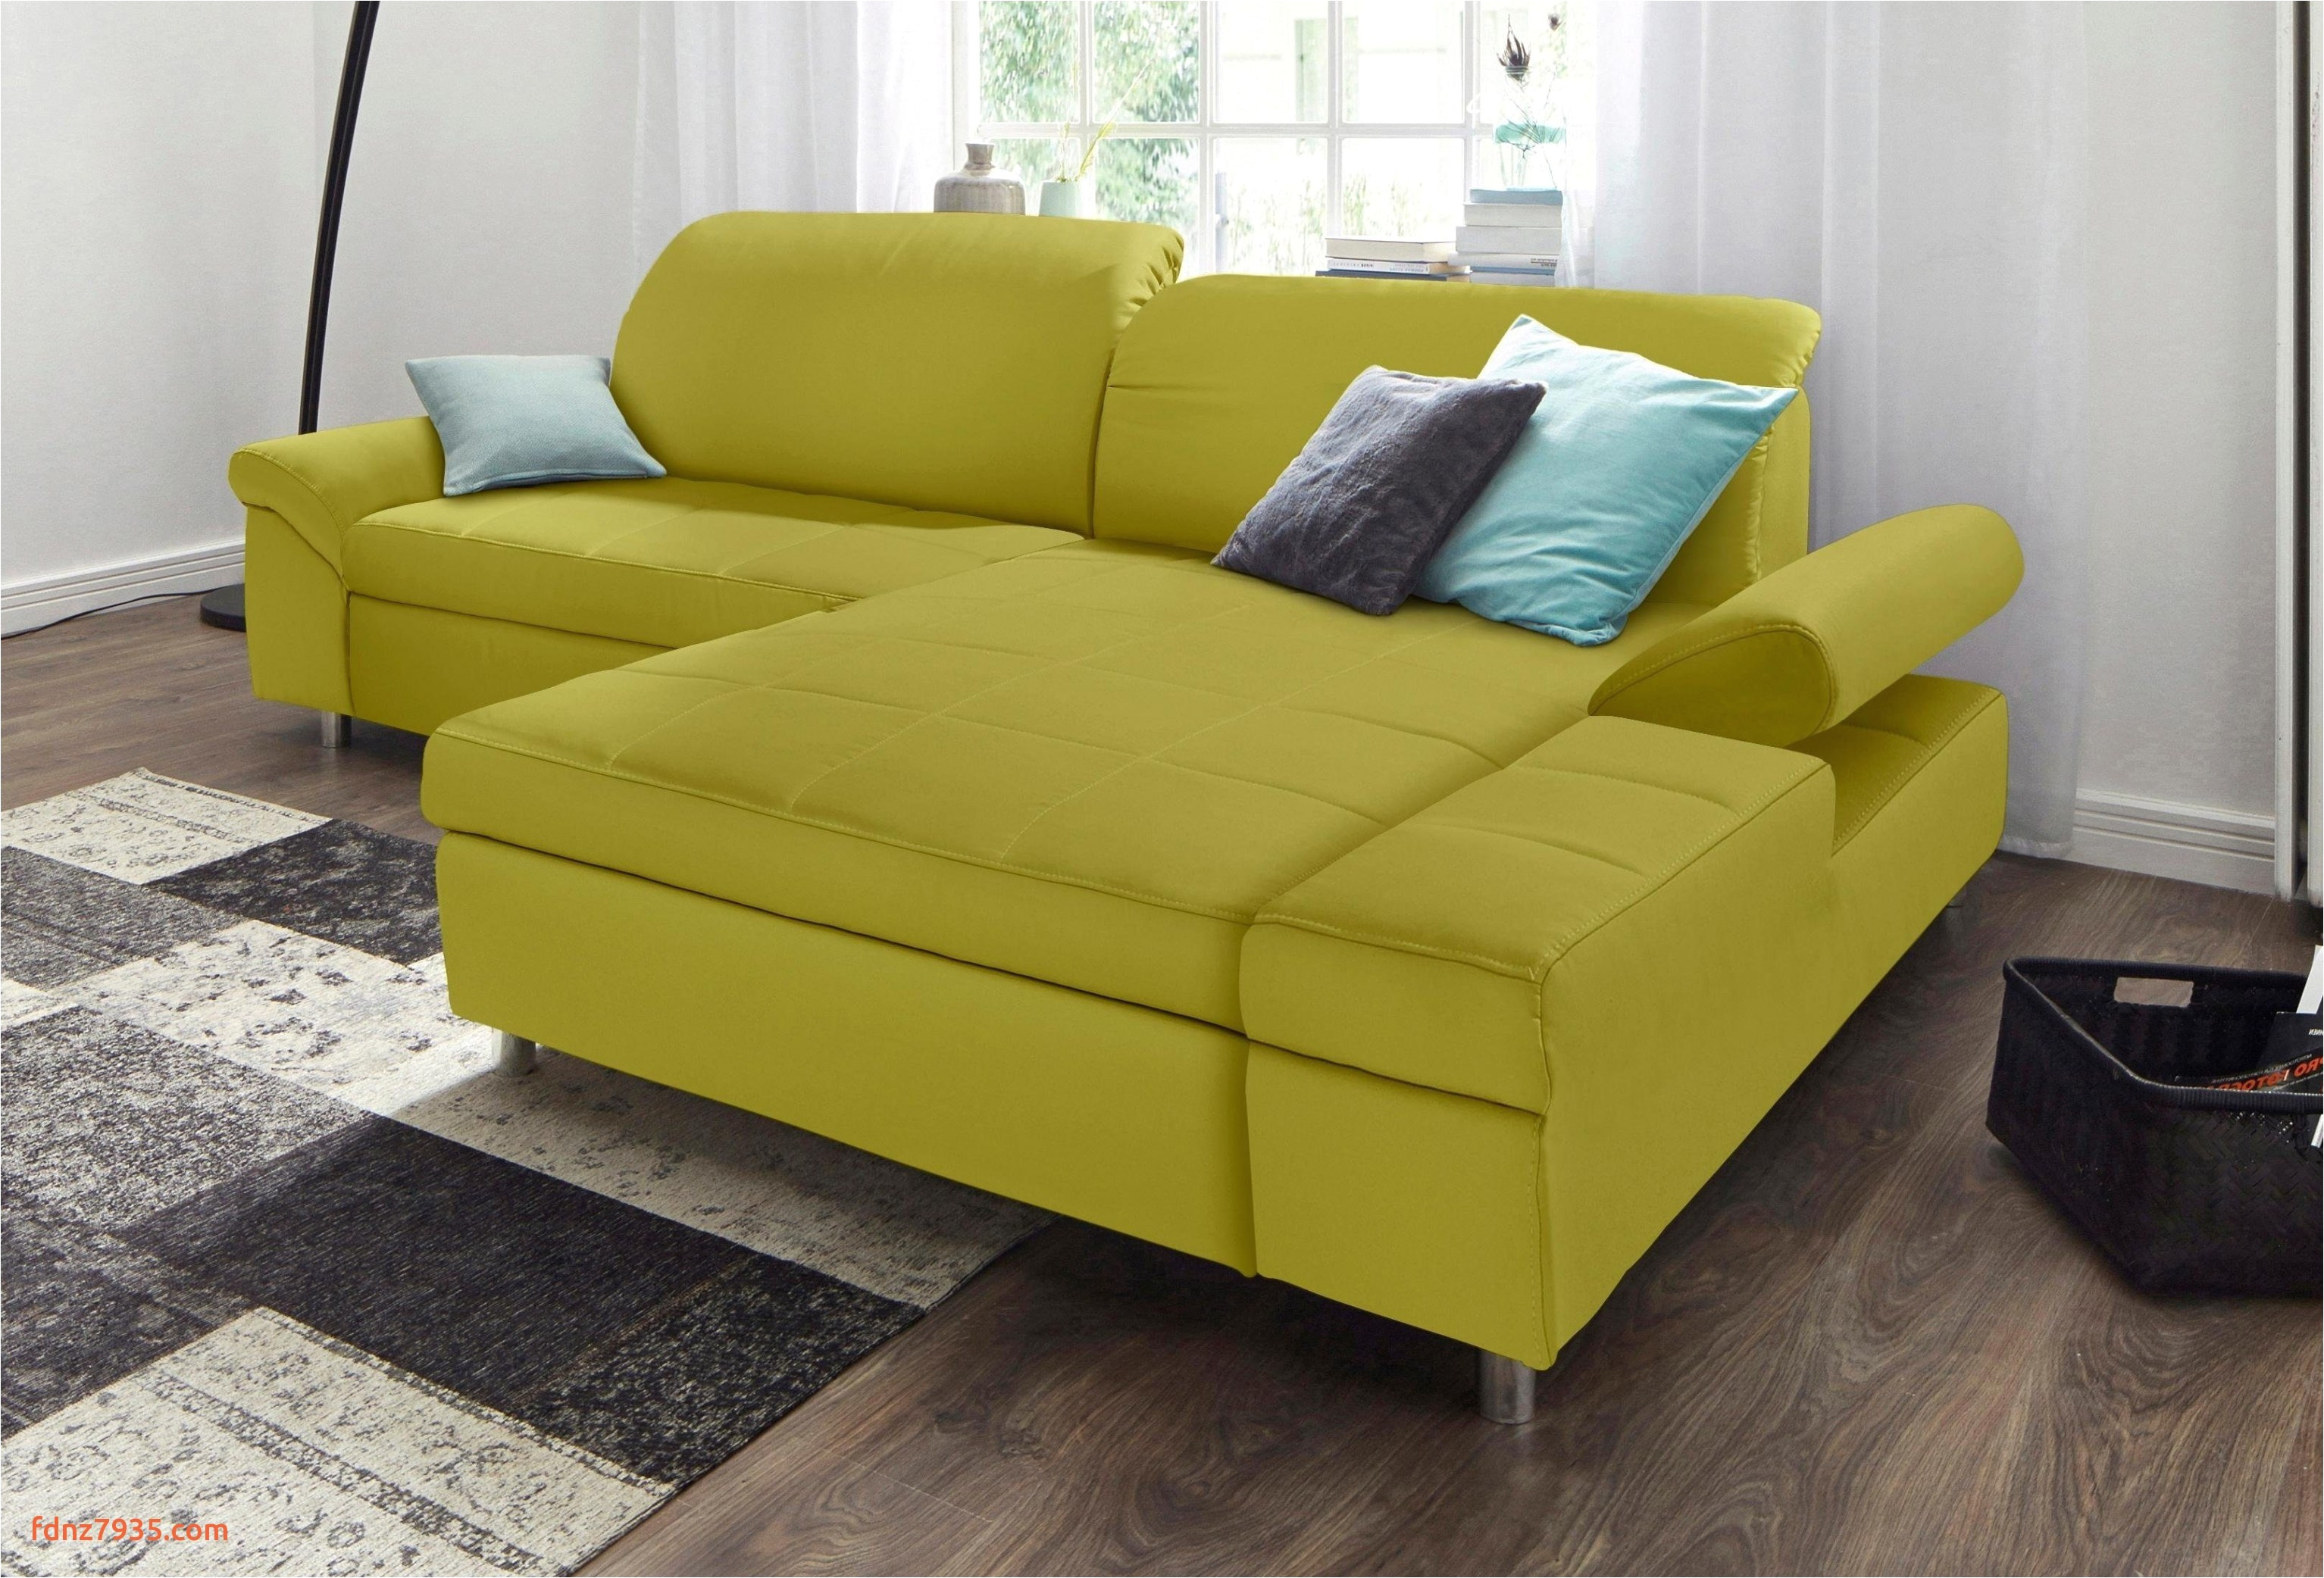 big sofa bed unique big sofa ikea mobel yellow living room lounge chair fresh